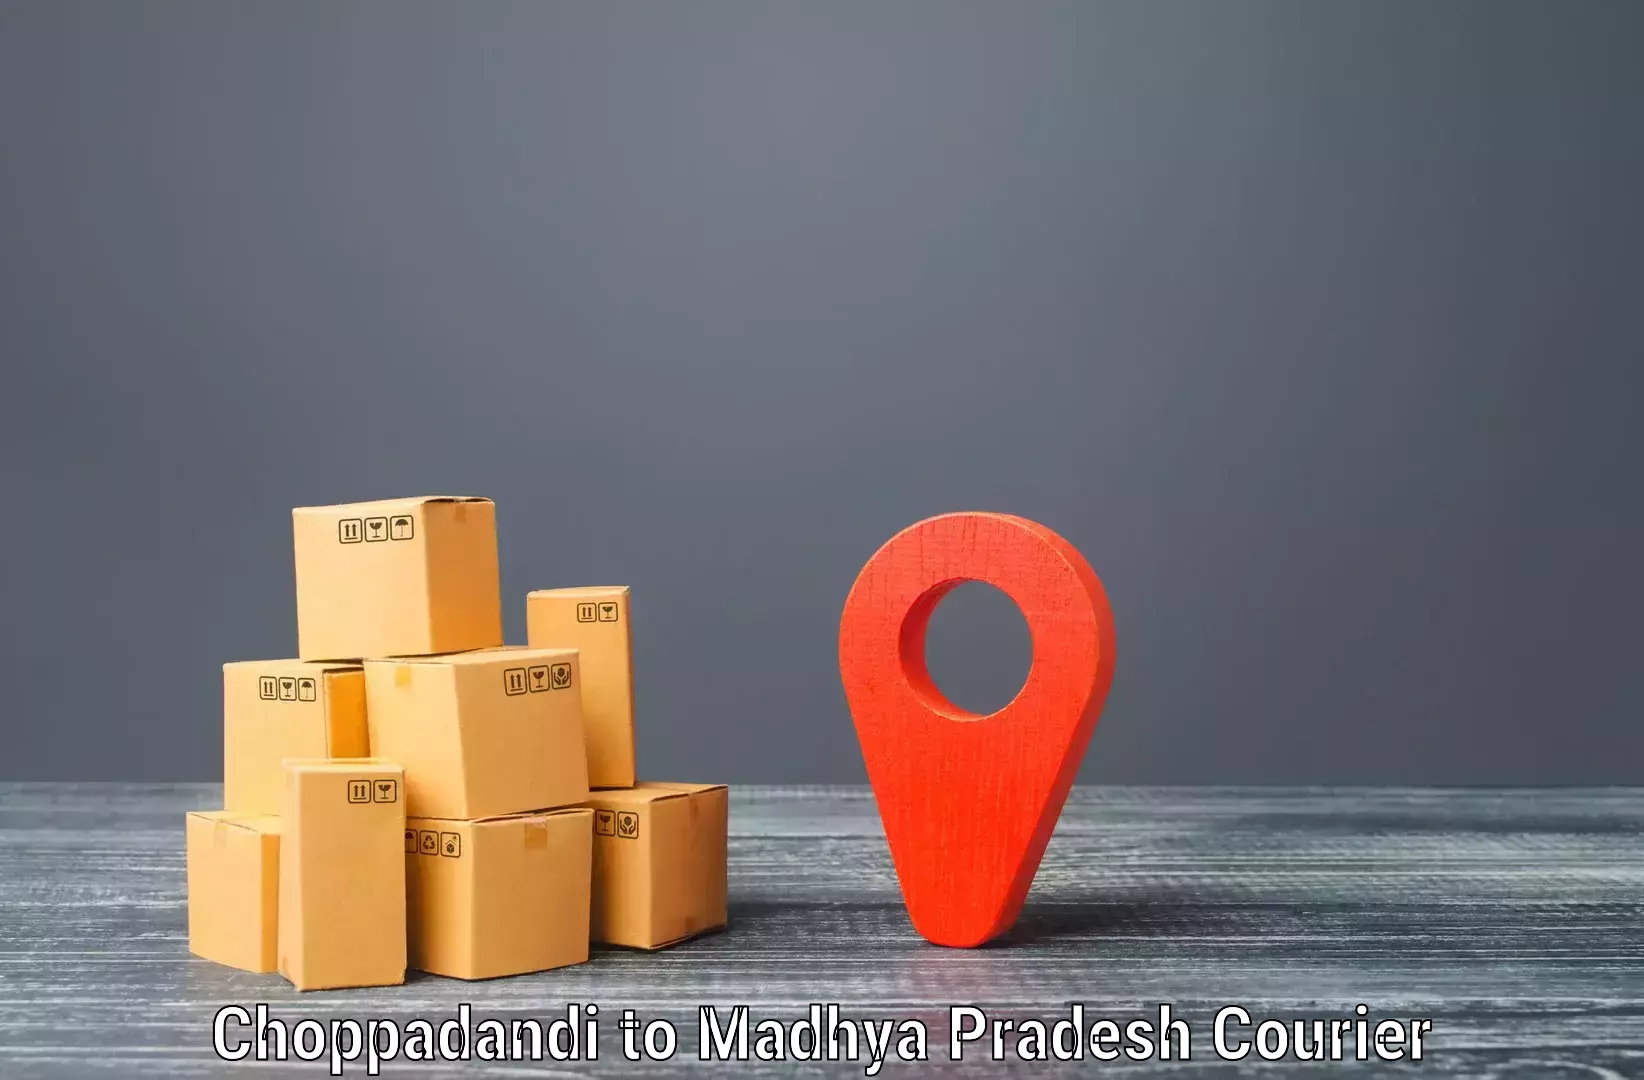 Tailored shipping plans Choppadandi to Nalkheda